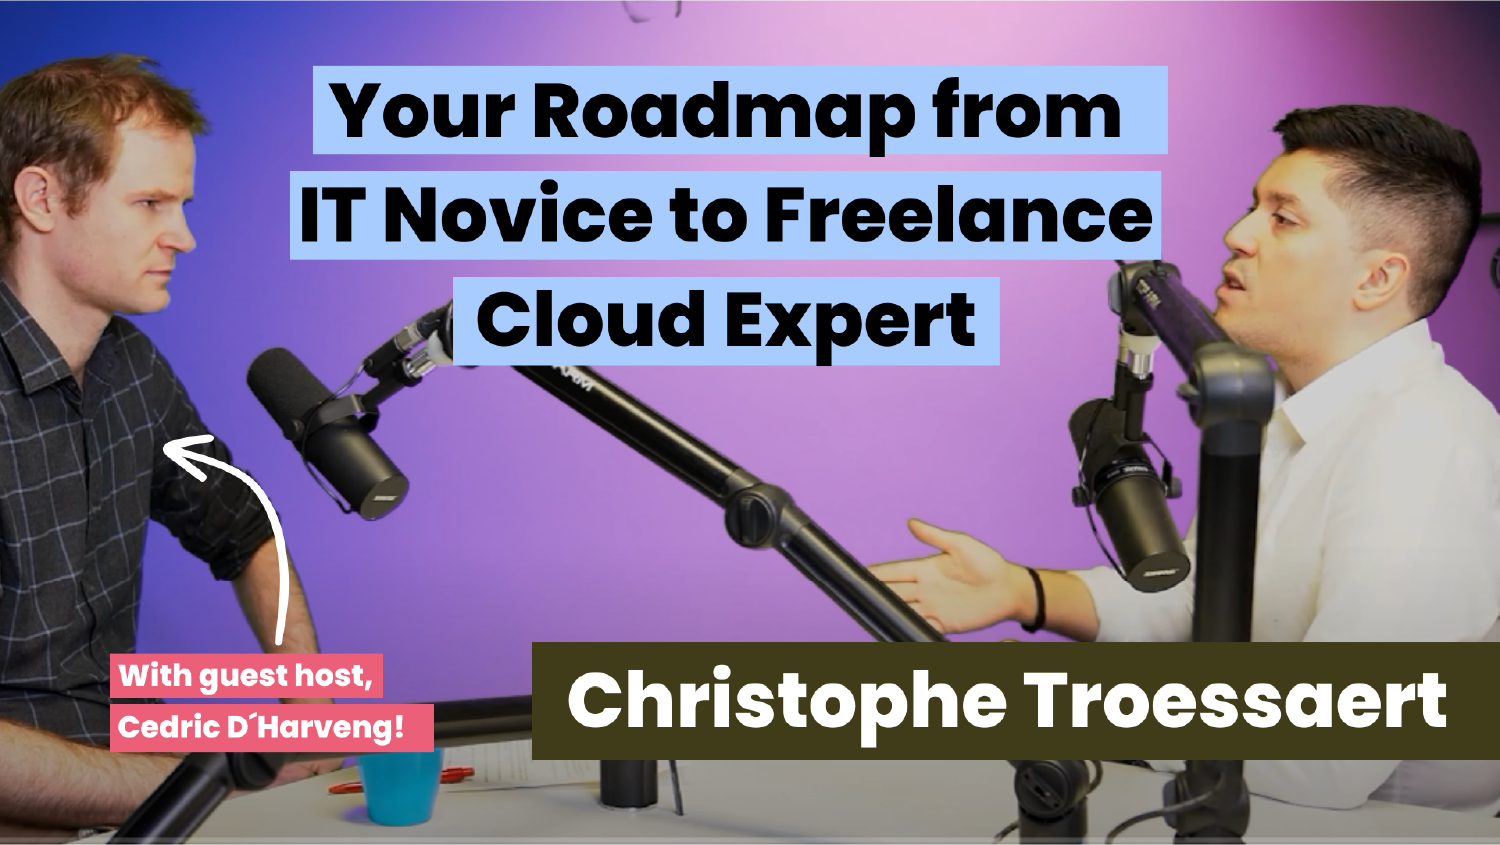 Folge 32: Christophe Troessaert: Vom IT-Neuling zum freiberuflichen Cloud-Experten